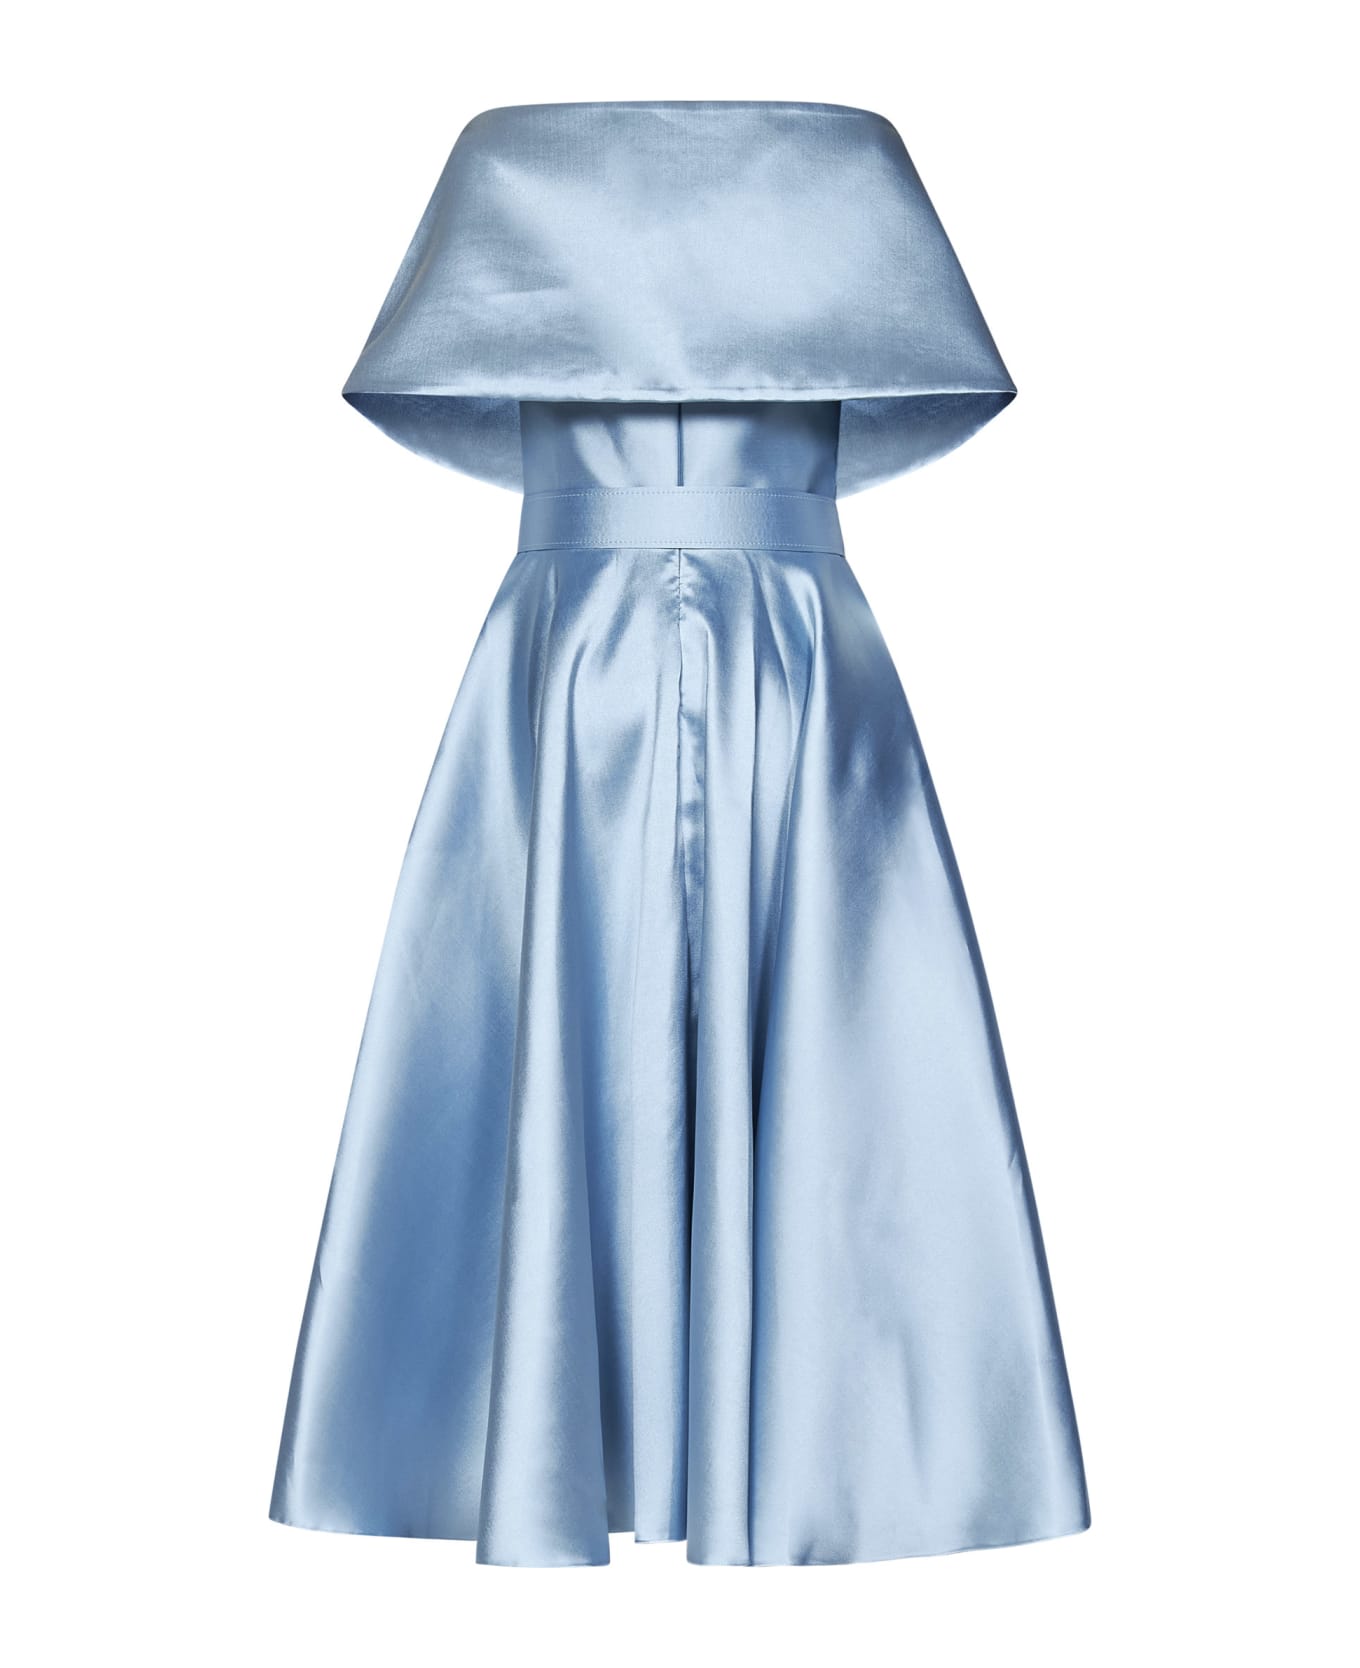 Rhea Costa Rima Dress - Light blue